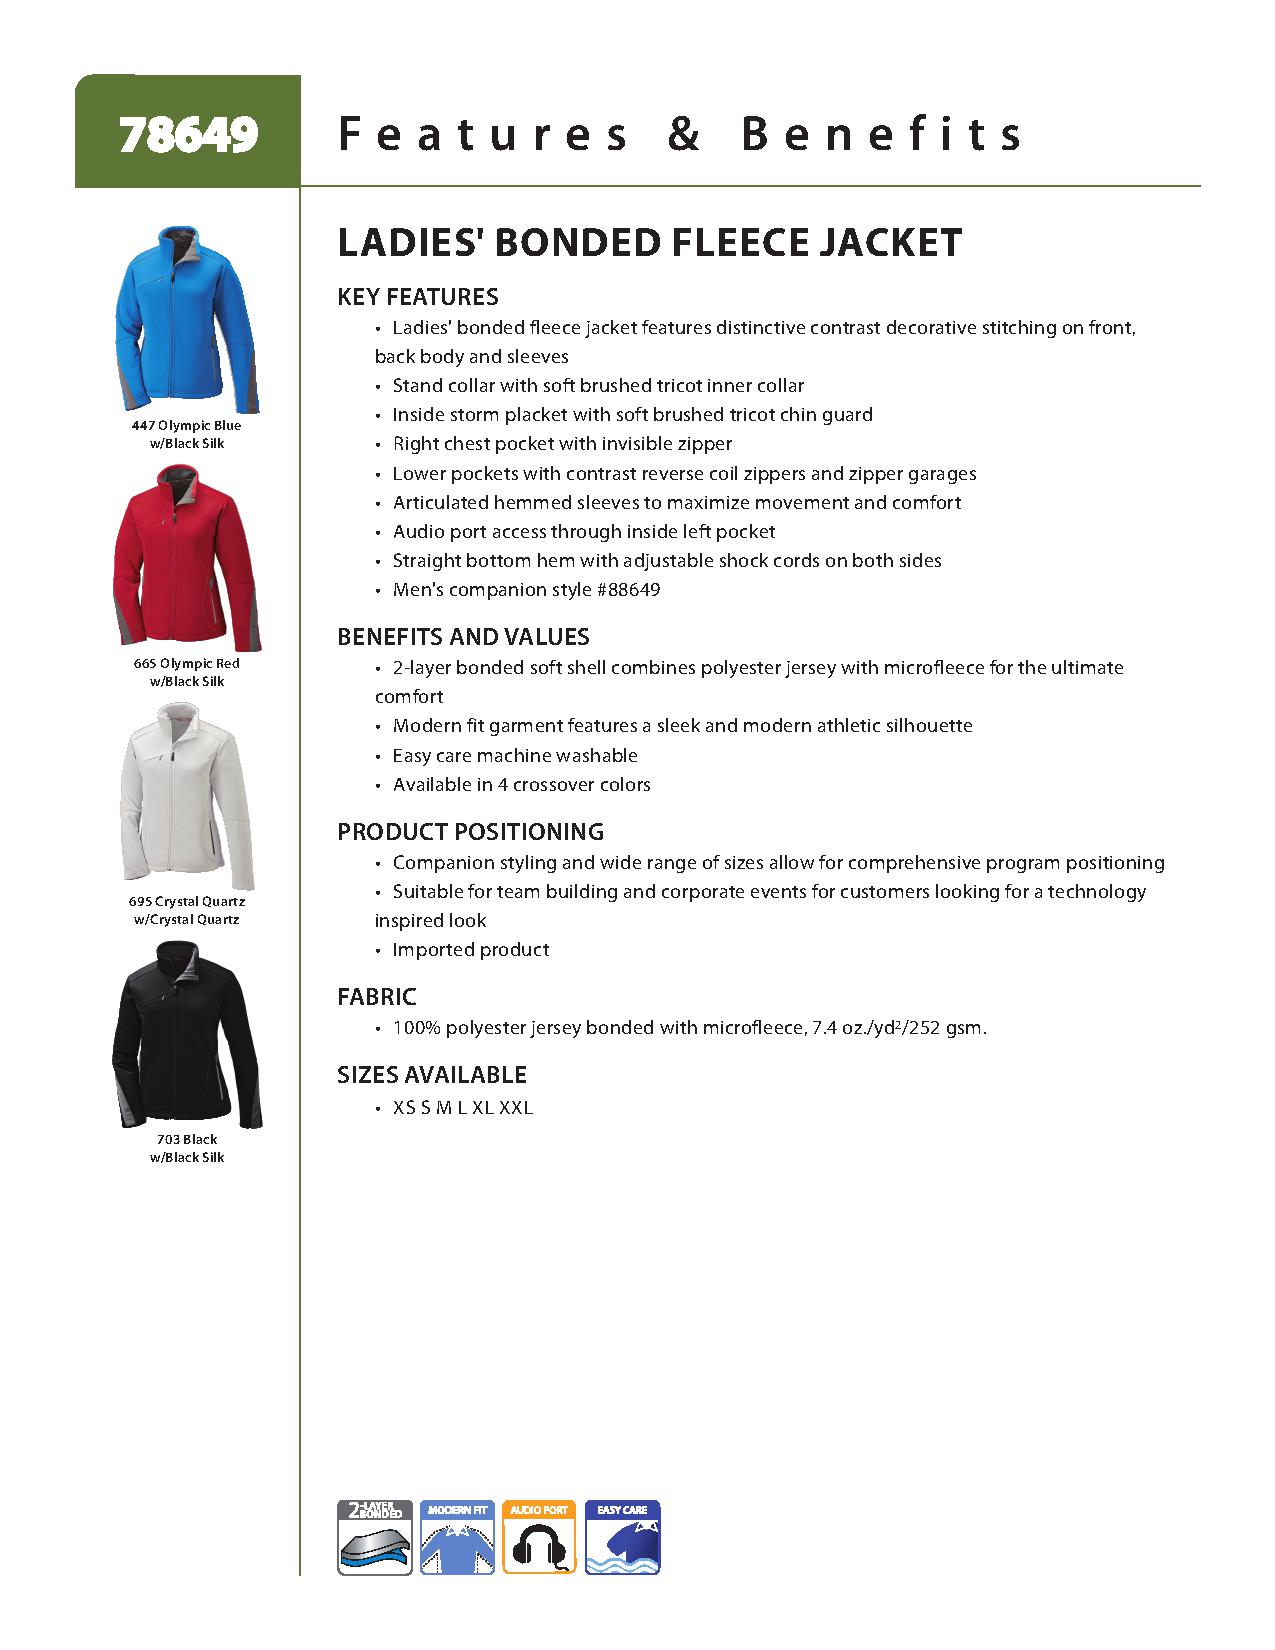 Ash City Bonded Fleece 78649 - Escape Ladies' Bonded Fleece Jacket